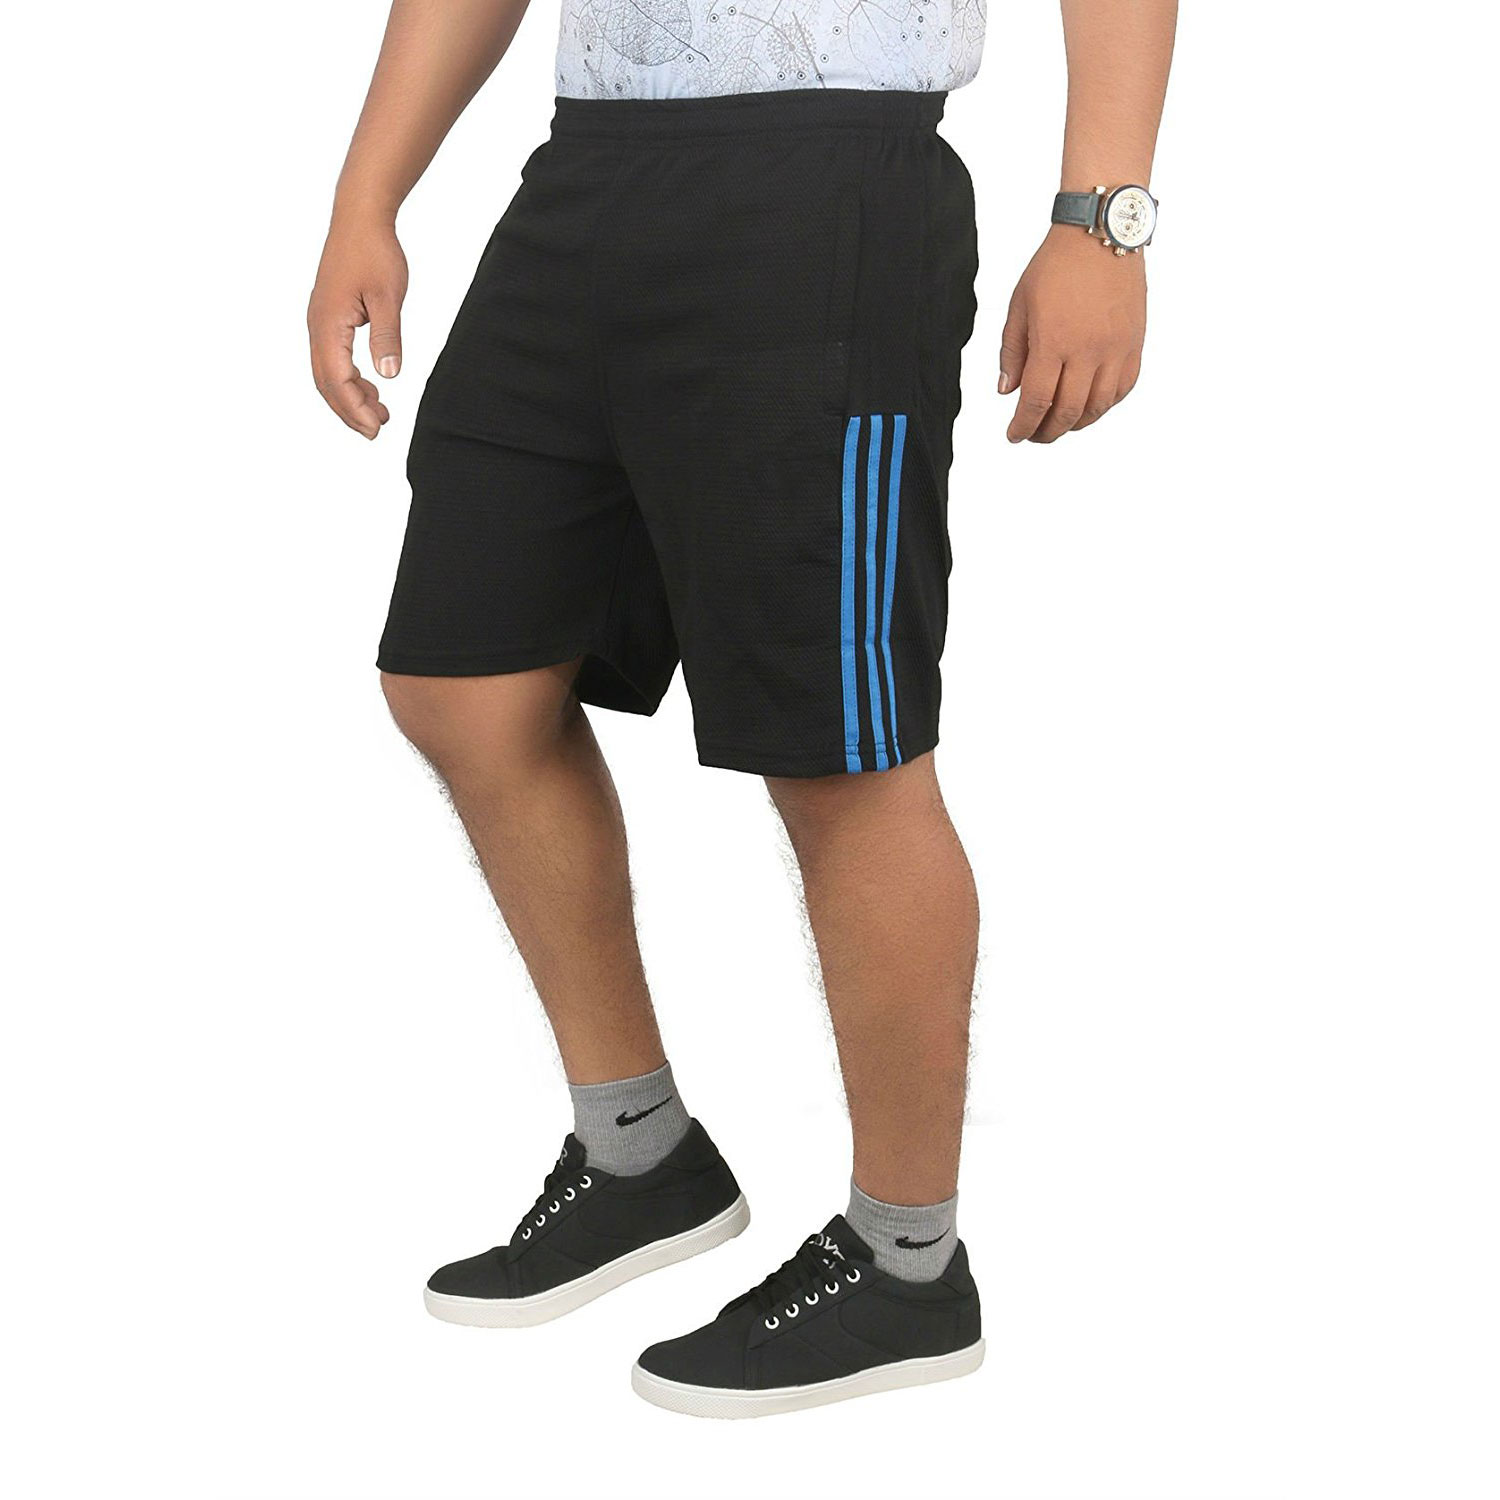  Men's Polyester Shorts, Gym Half Pants